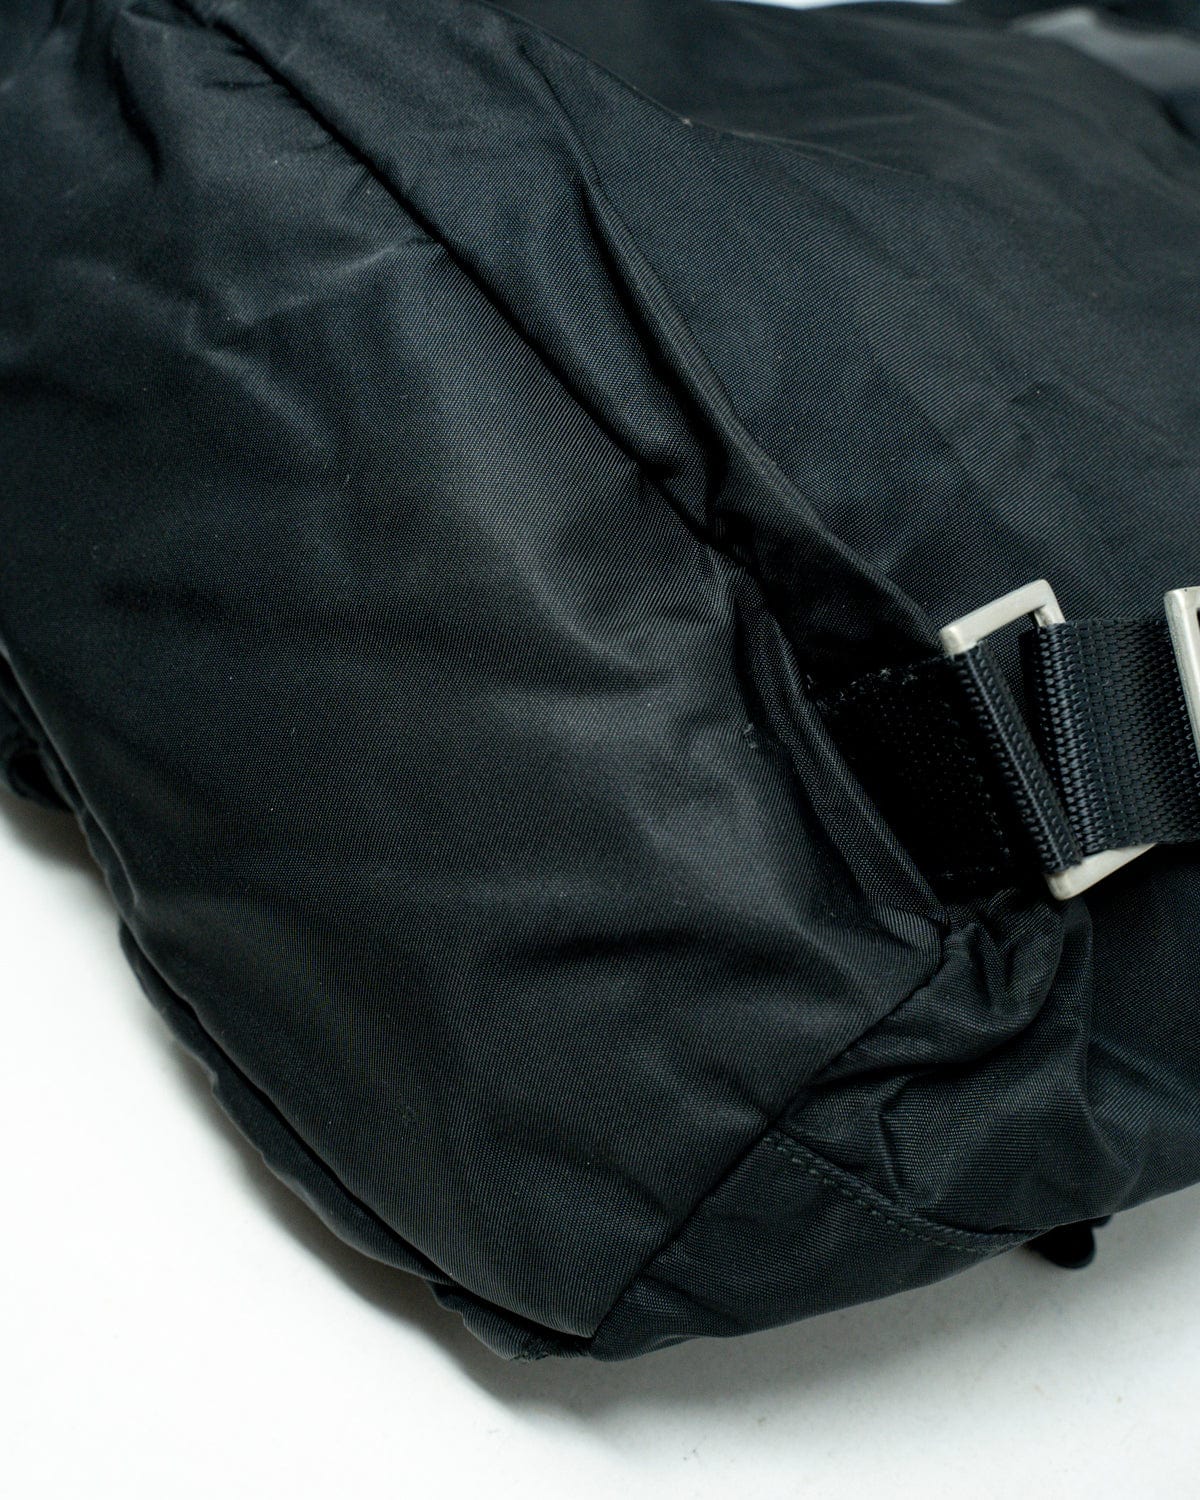 Prada PRADA Vintage Small Nylon Backpack with Two Front Pockets - AWL3192